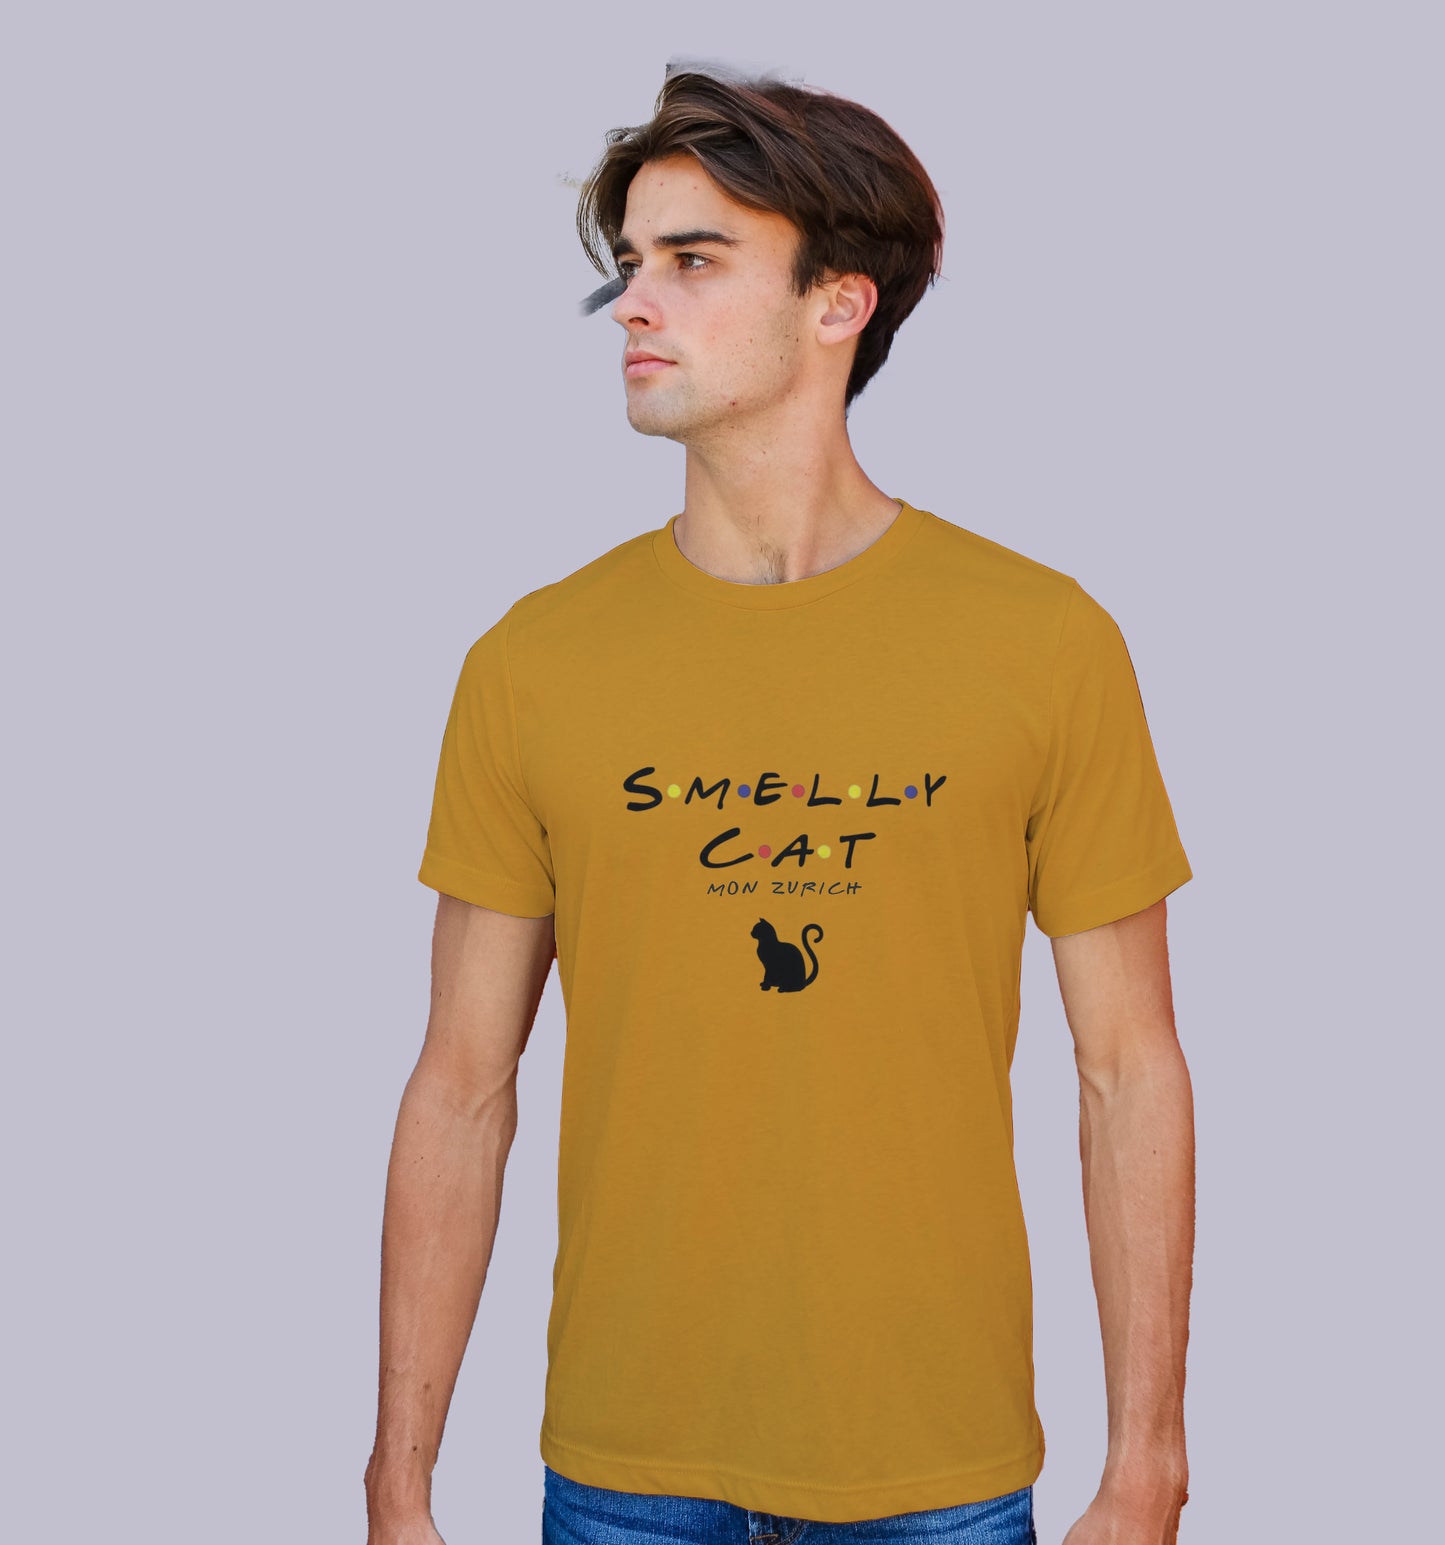 Smelly Cat T-Shirt In Vibrant Shades - Mon Zurich Originals